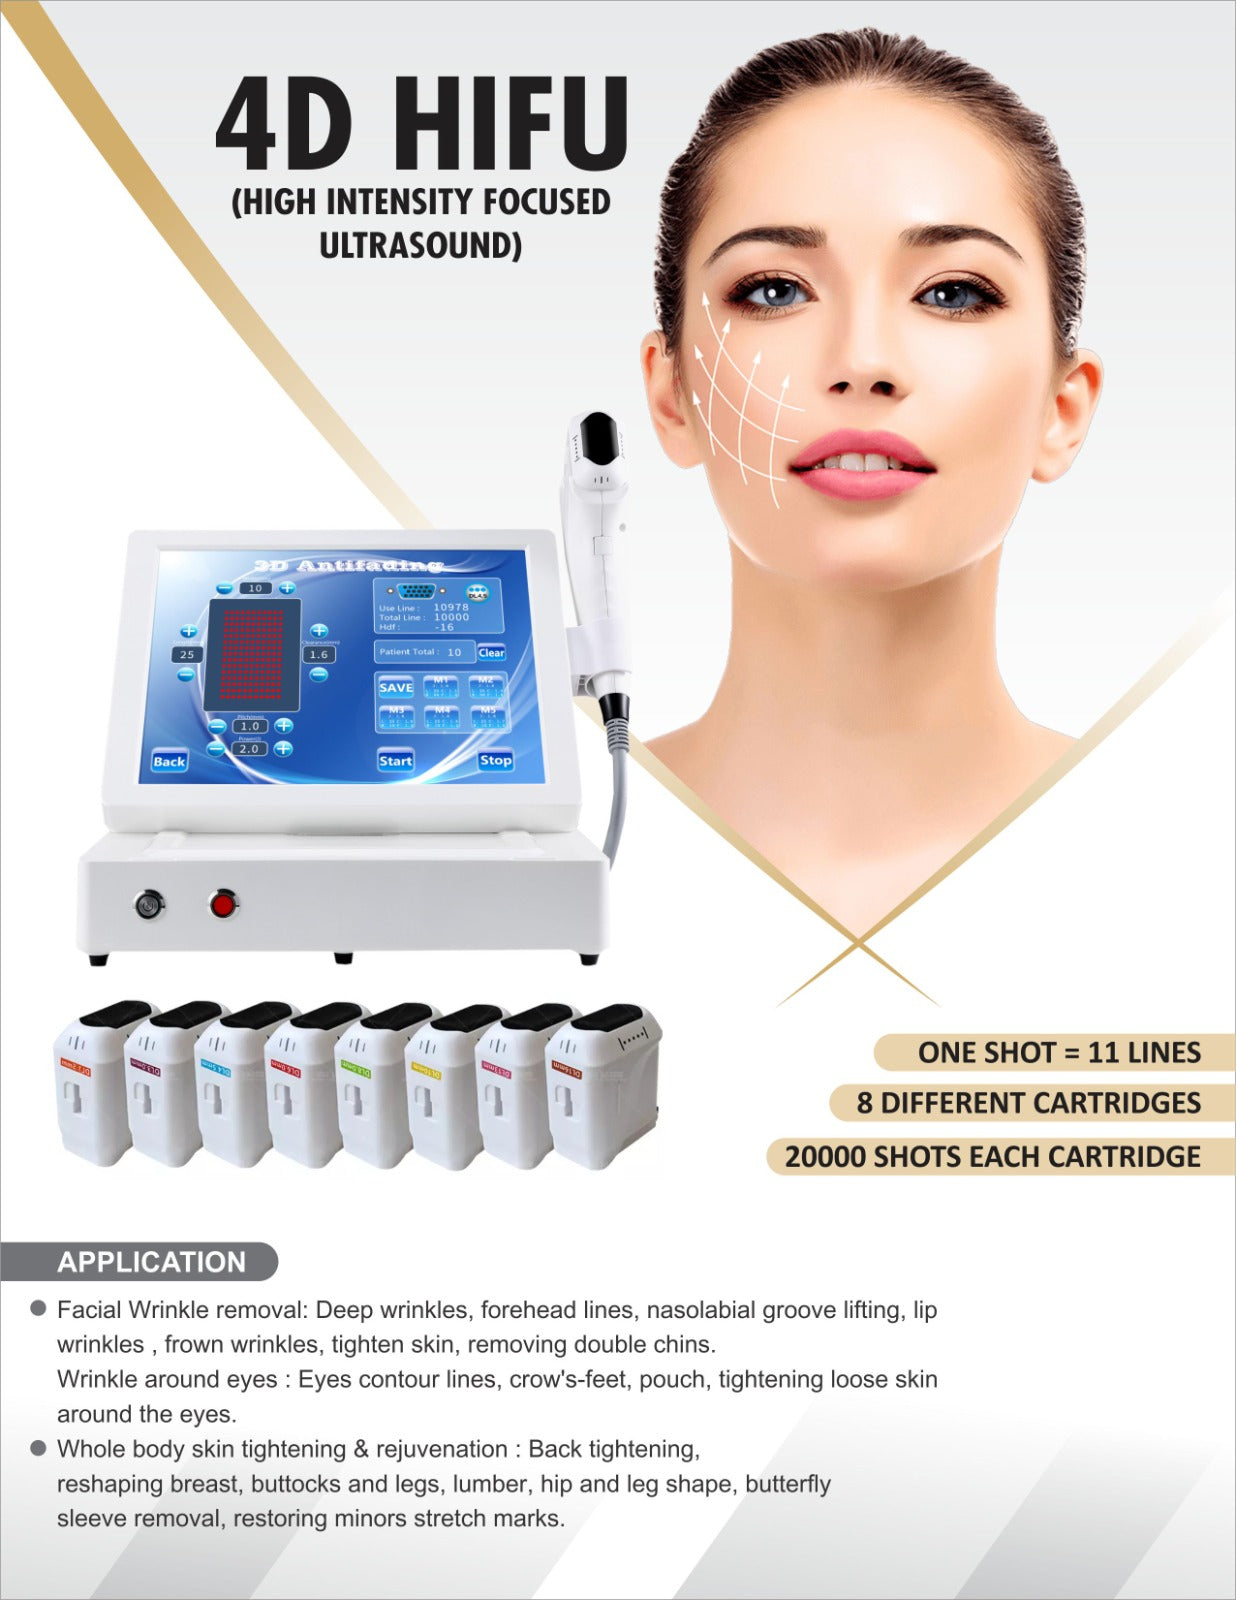 4D HIFU Ultrasound Machine in Pakistan - 4D HIFU High Intensity Focused Ultrasound - Wrinkle Removal Beauty Machine - 4D HIFU Machines in Pakistan